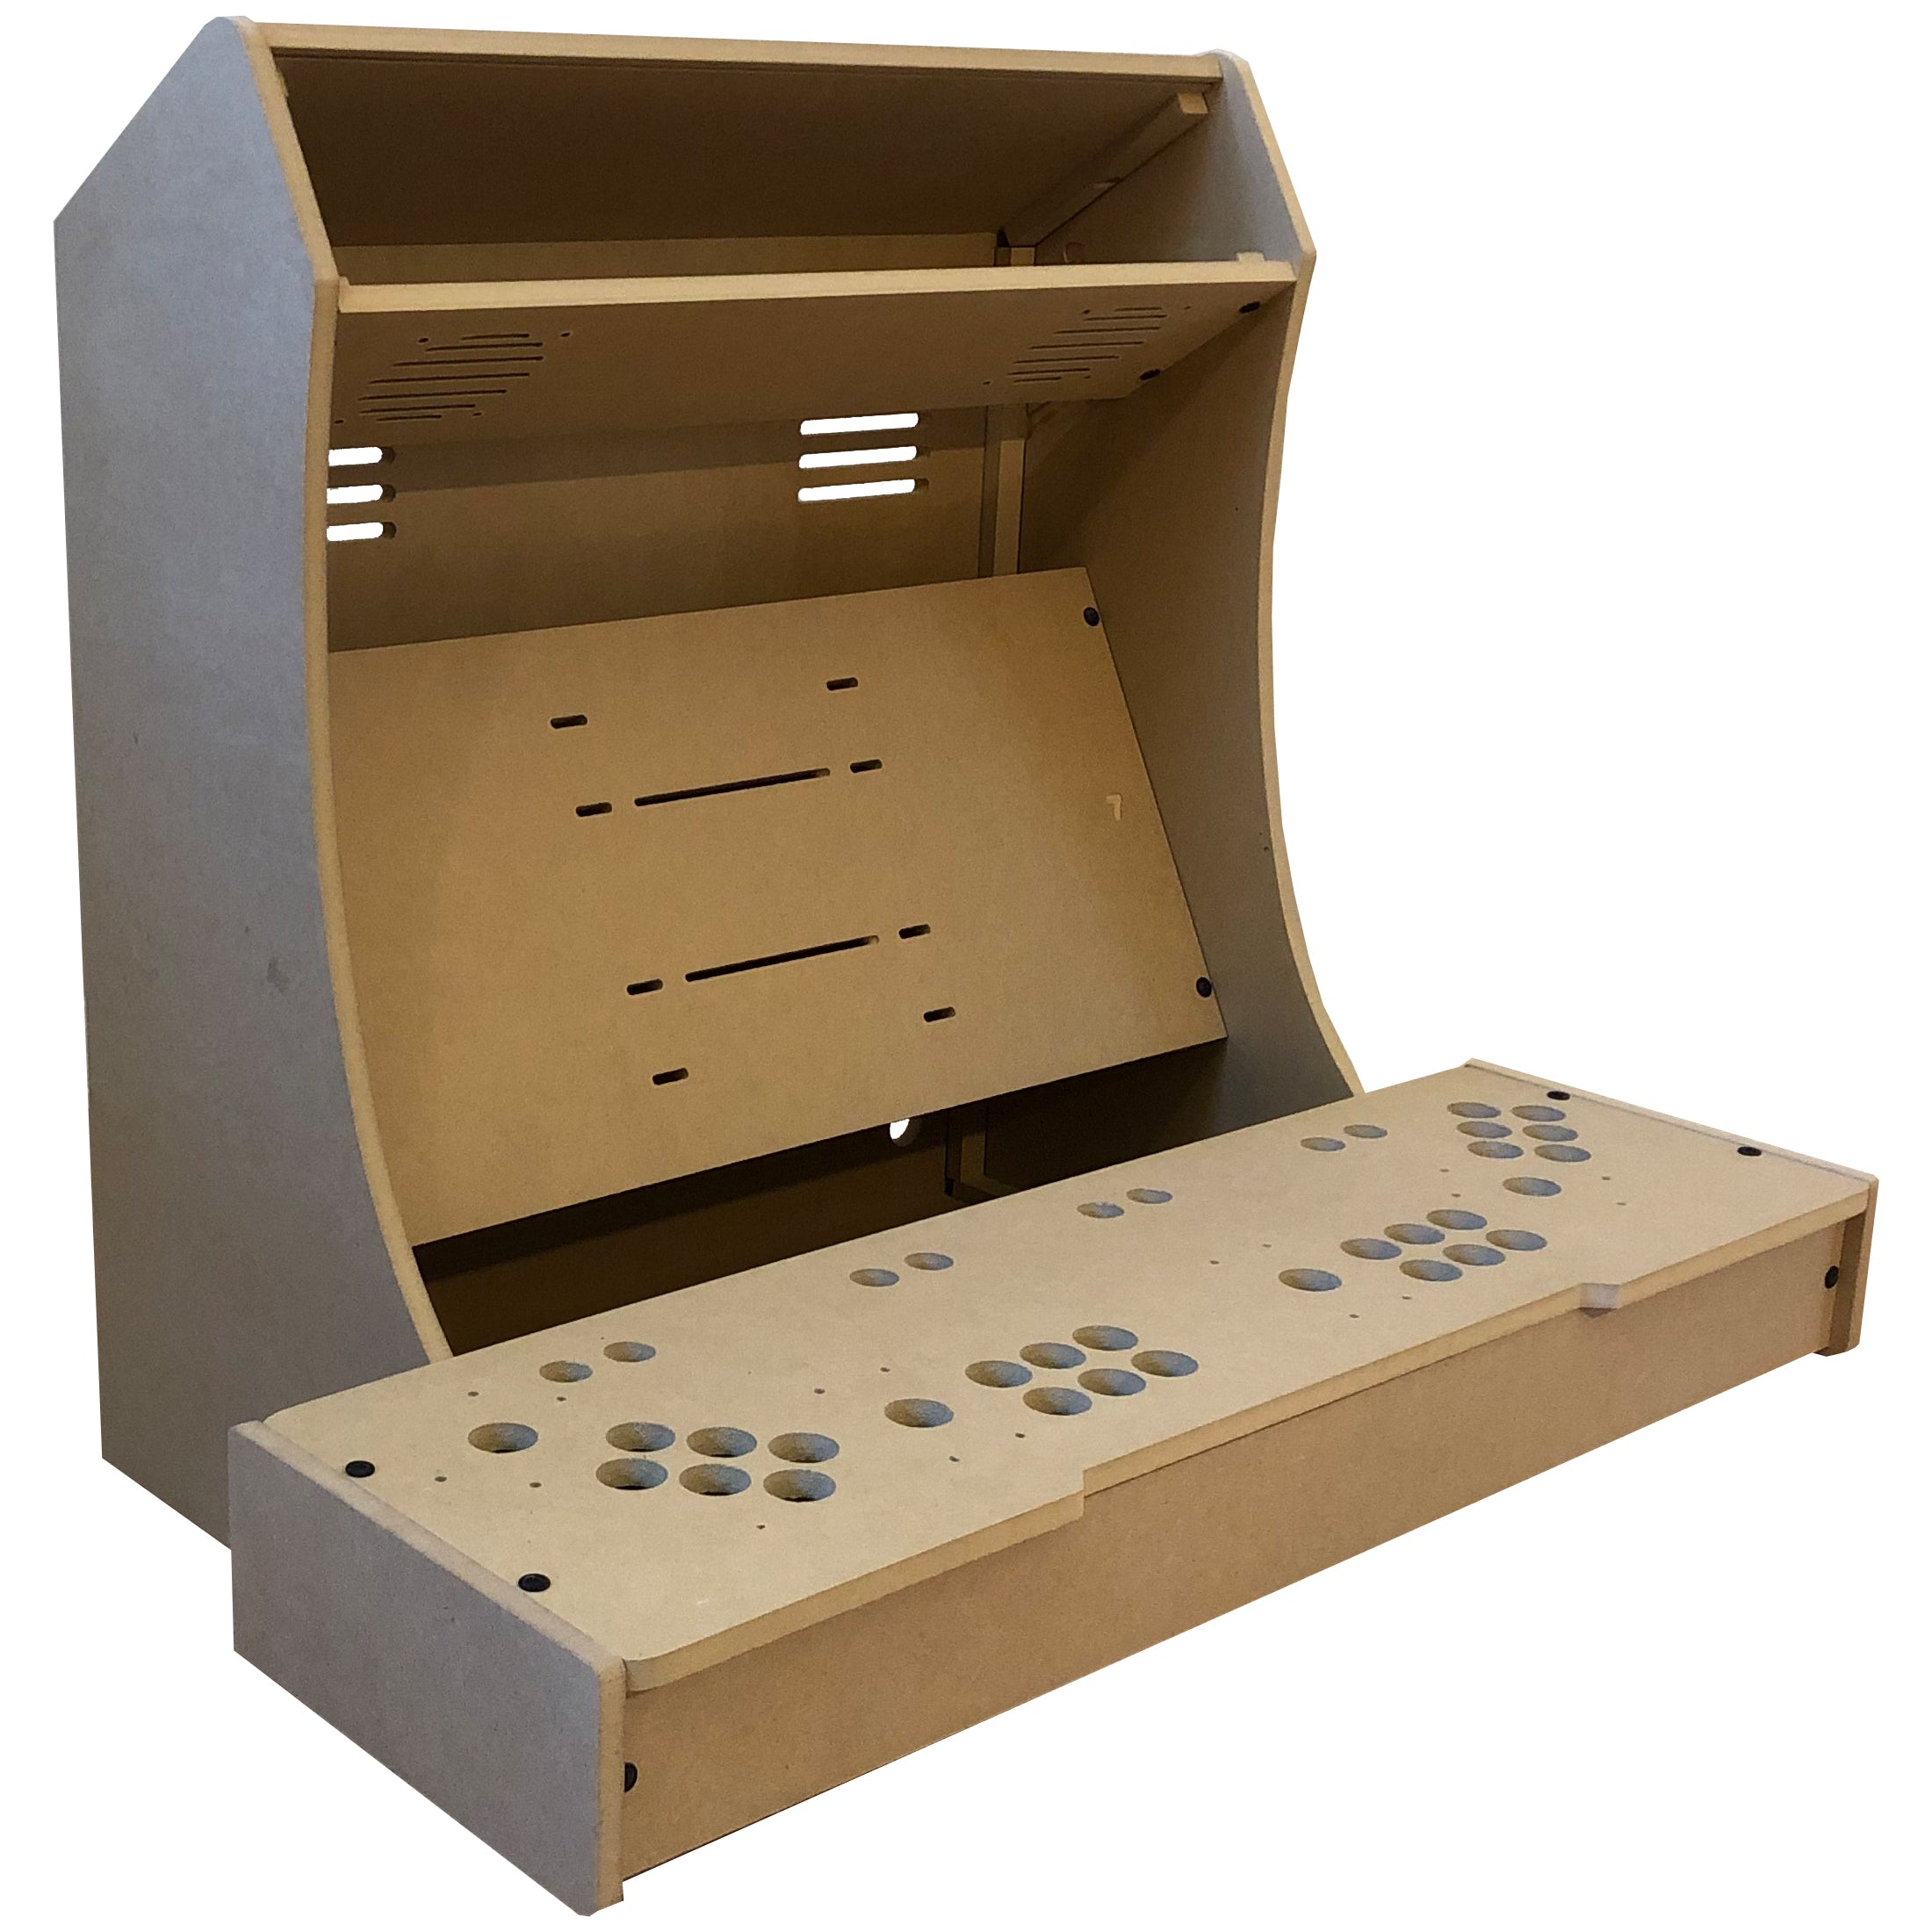 Lvl27x4 4 Player Bartop Arcade Cabinet